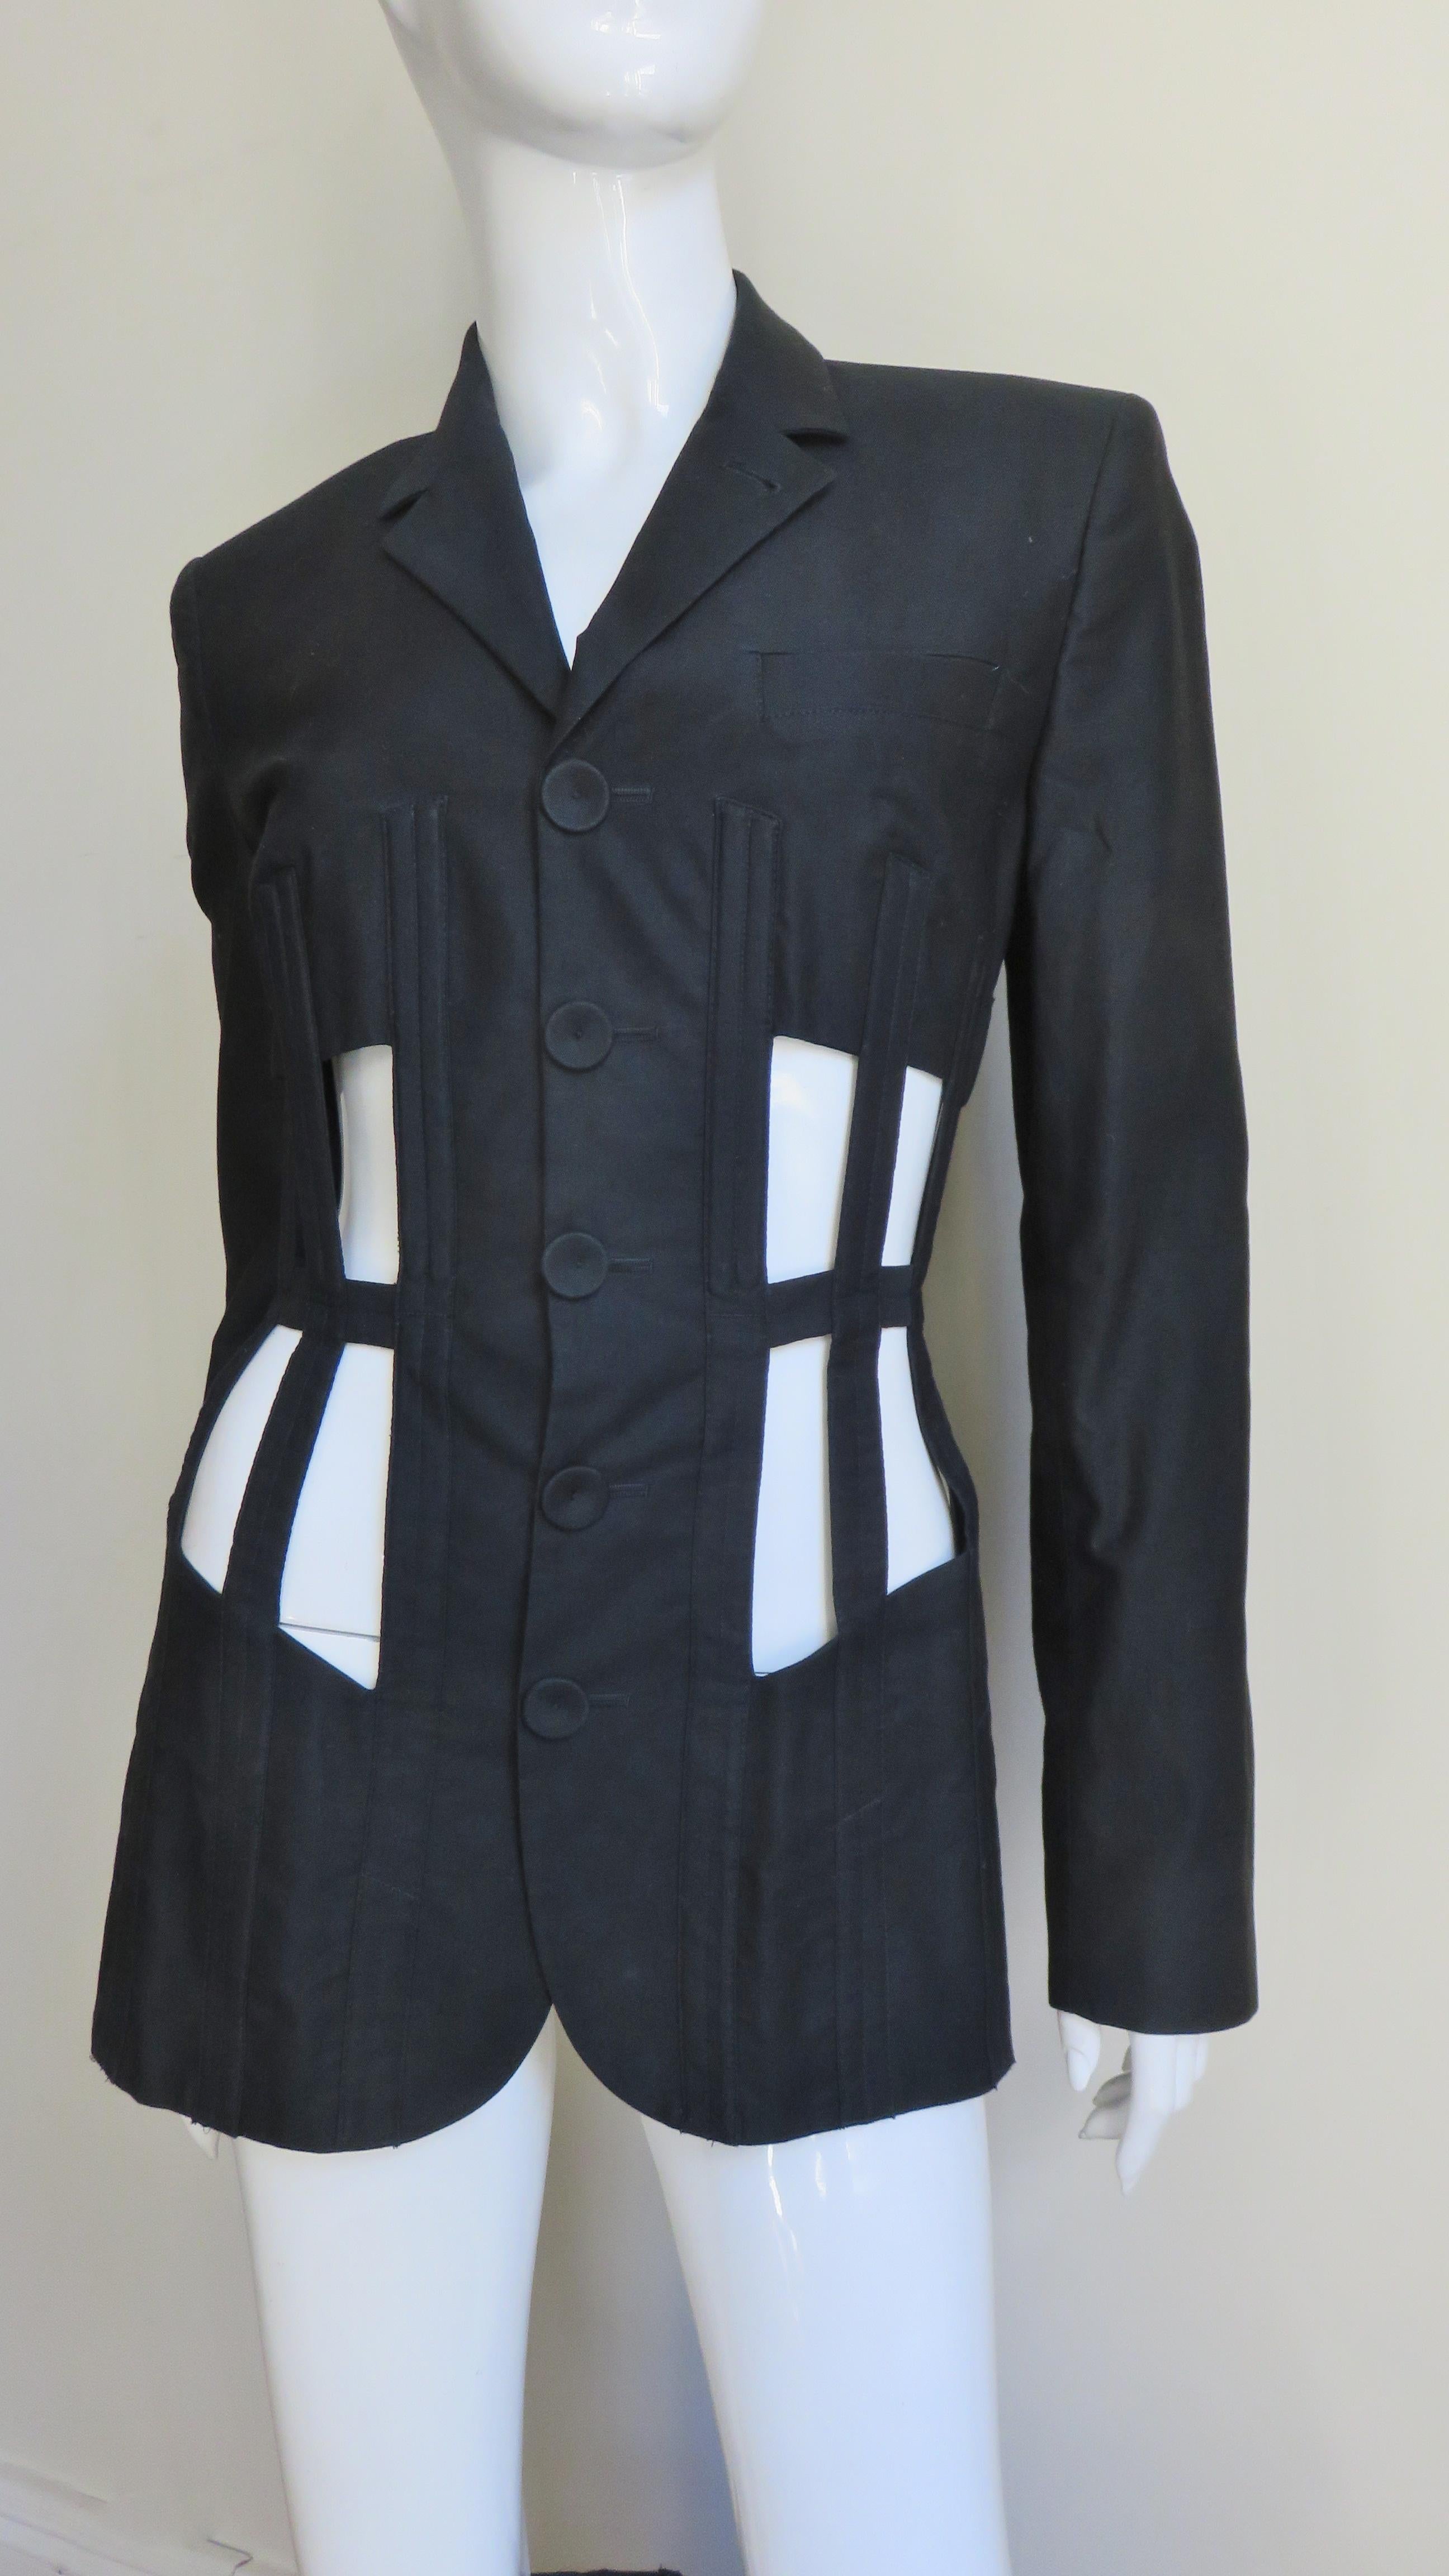 Jean Paul Gaultier Iconic Cage Corset lace up Jacket Pant Suit S/S 1989 For Sale 1